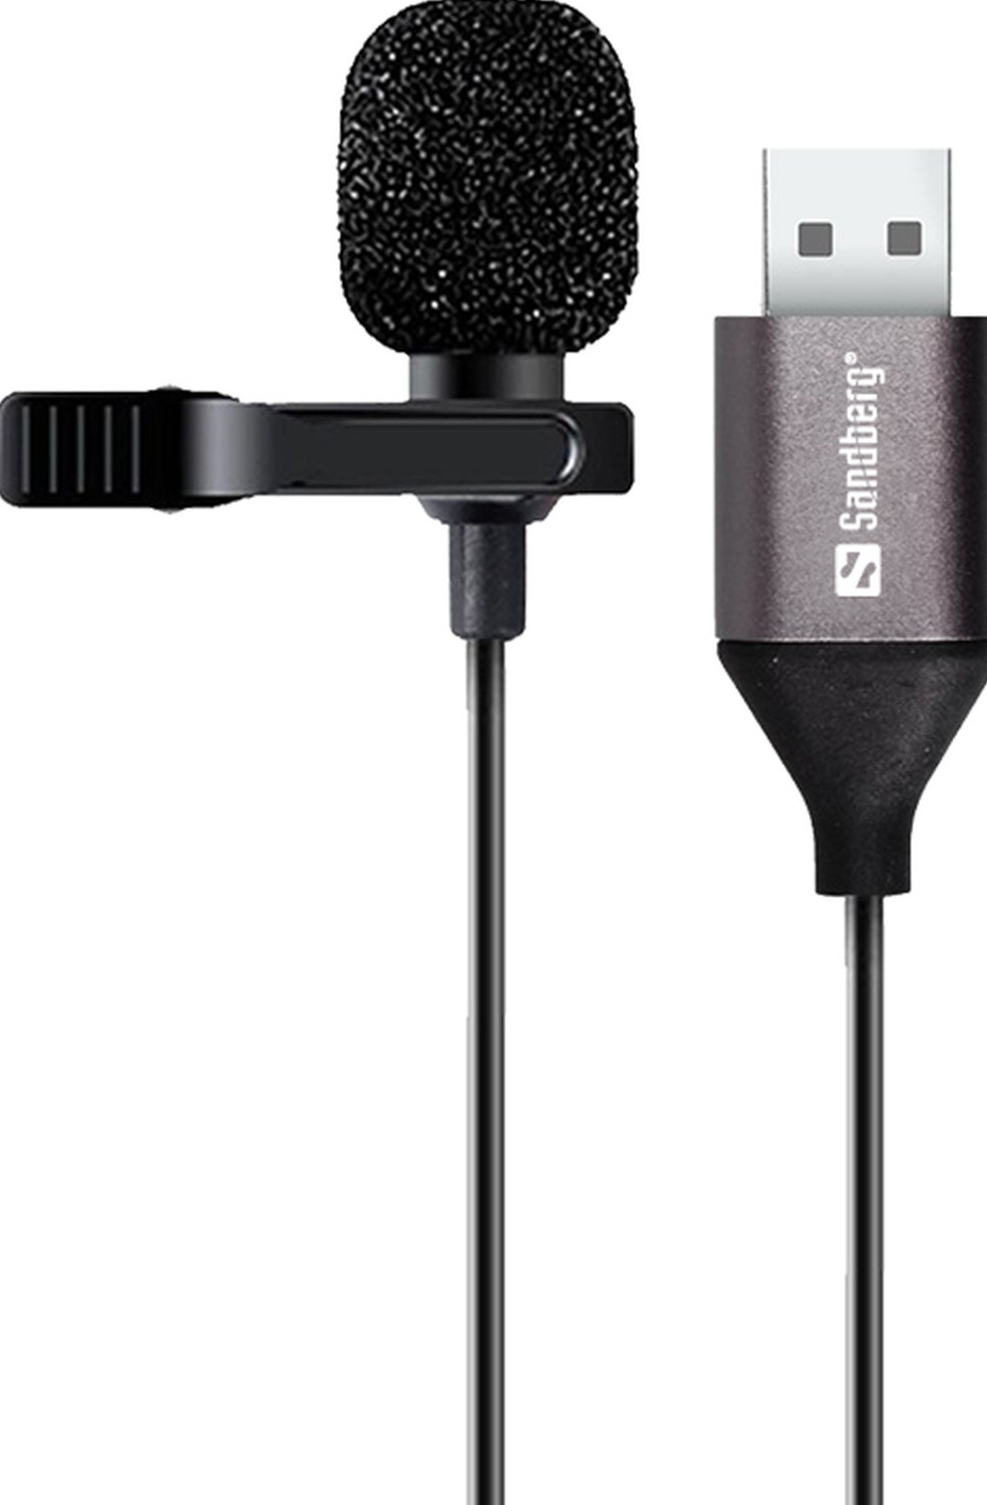 Streamer USB Clip Microphone Streamer USB Clip Microphone,